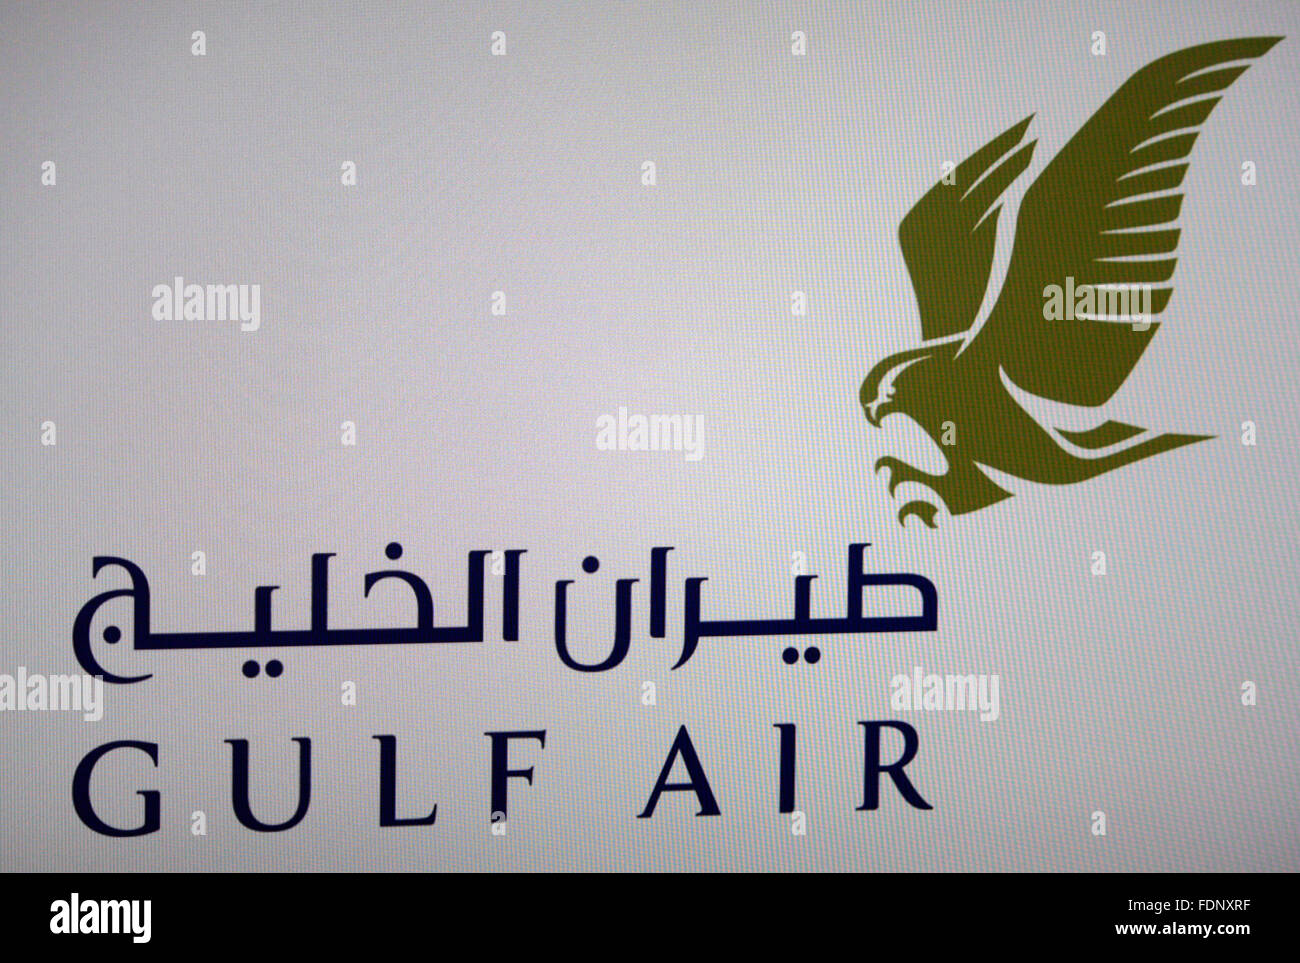 Markenname: "Gulf Air", Berlin Stock Photo - Alamy